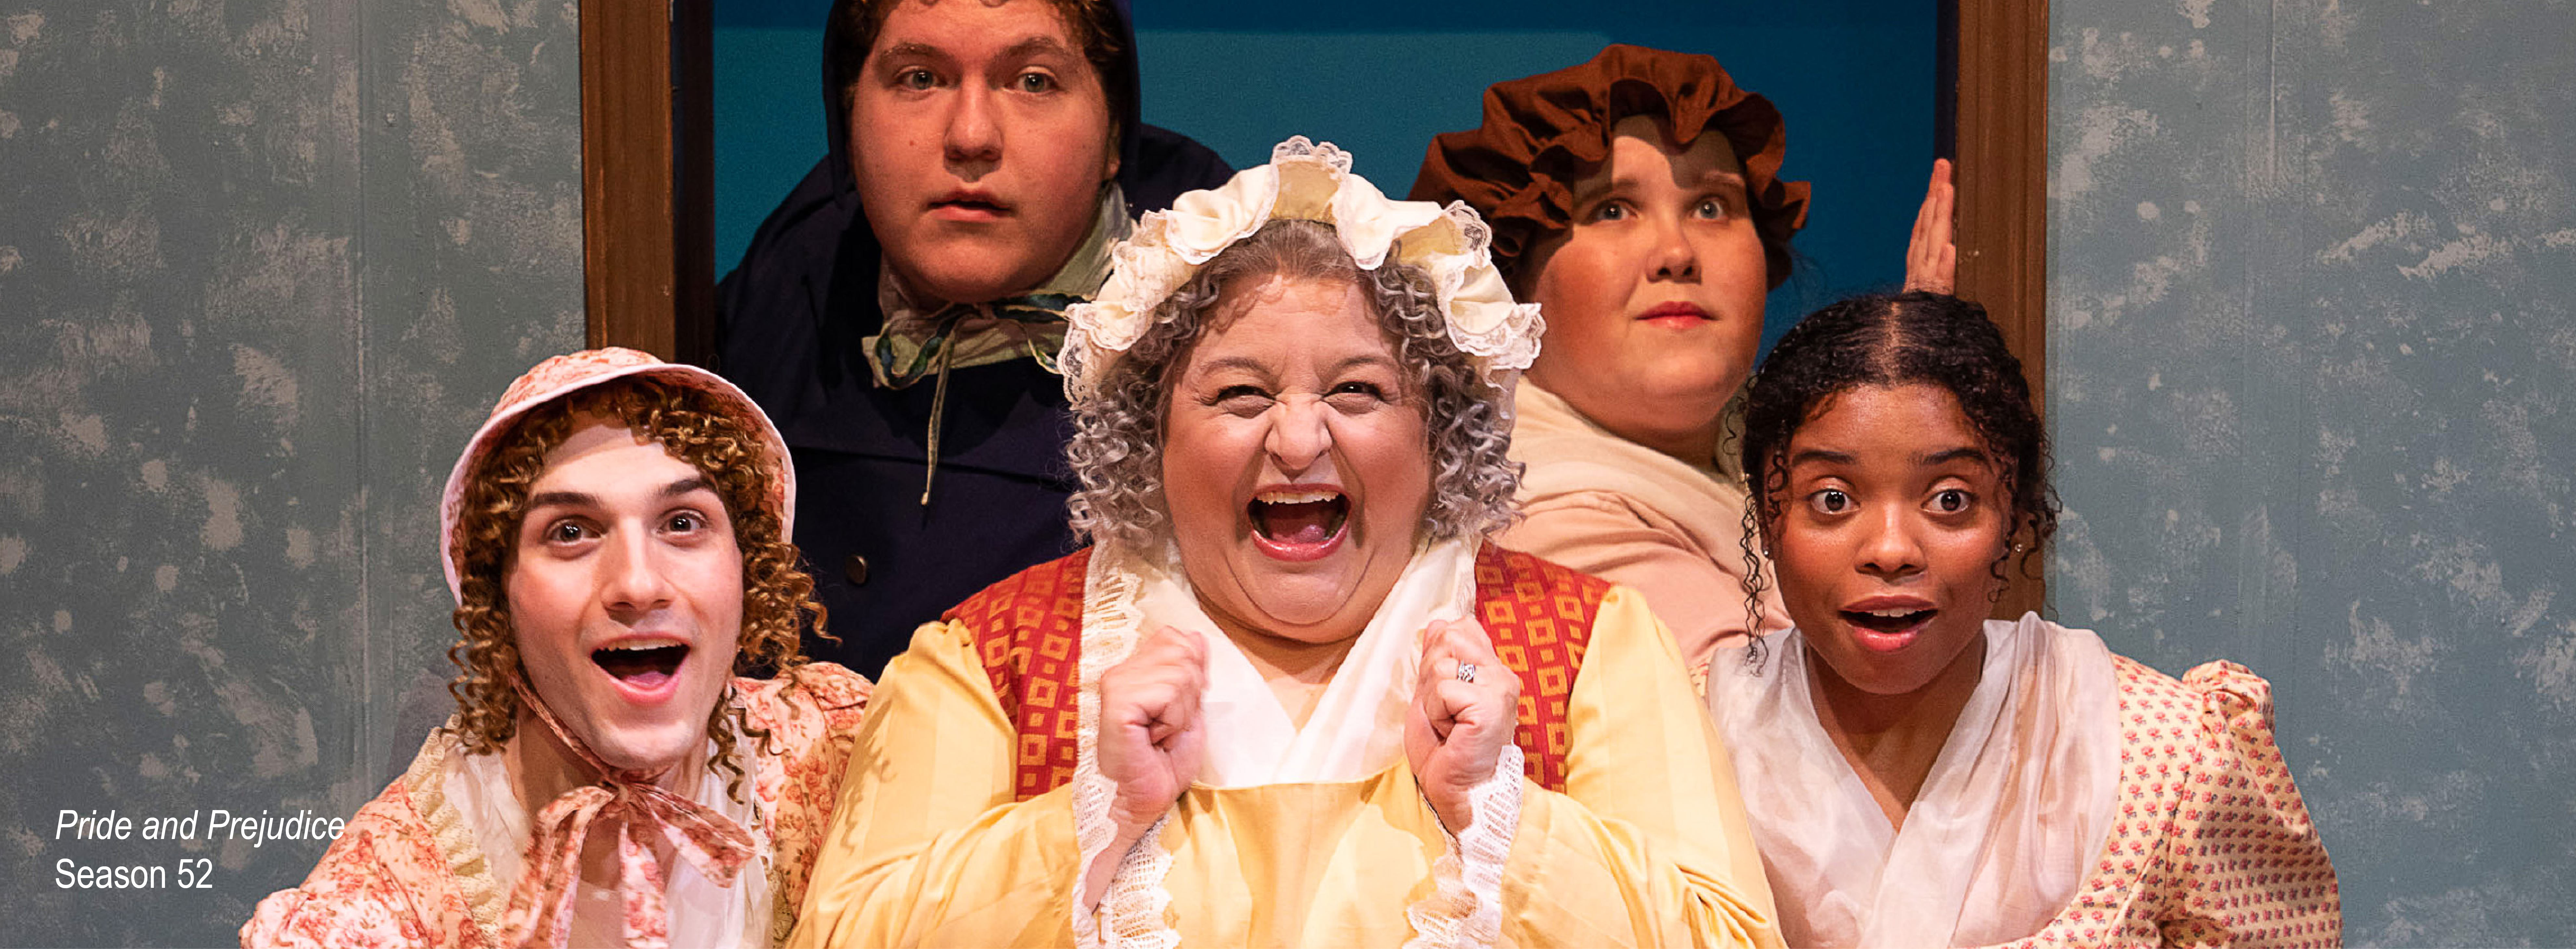 5 actors scream joyfully in period costume